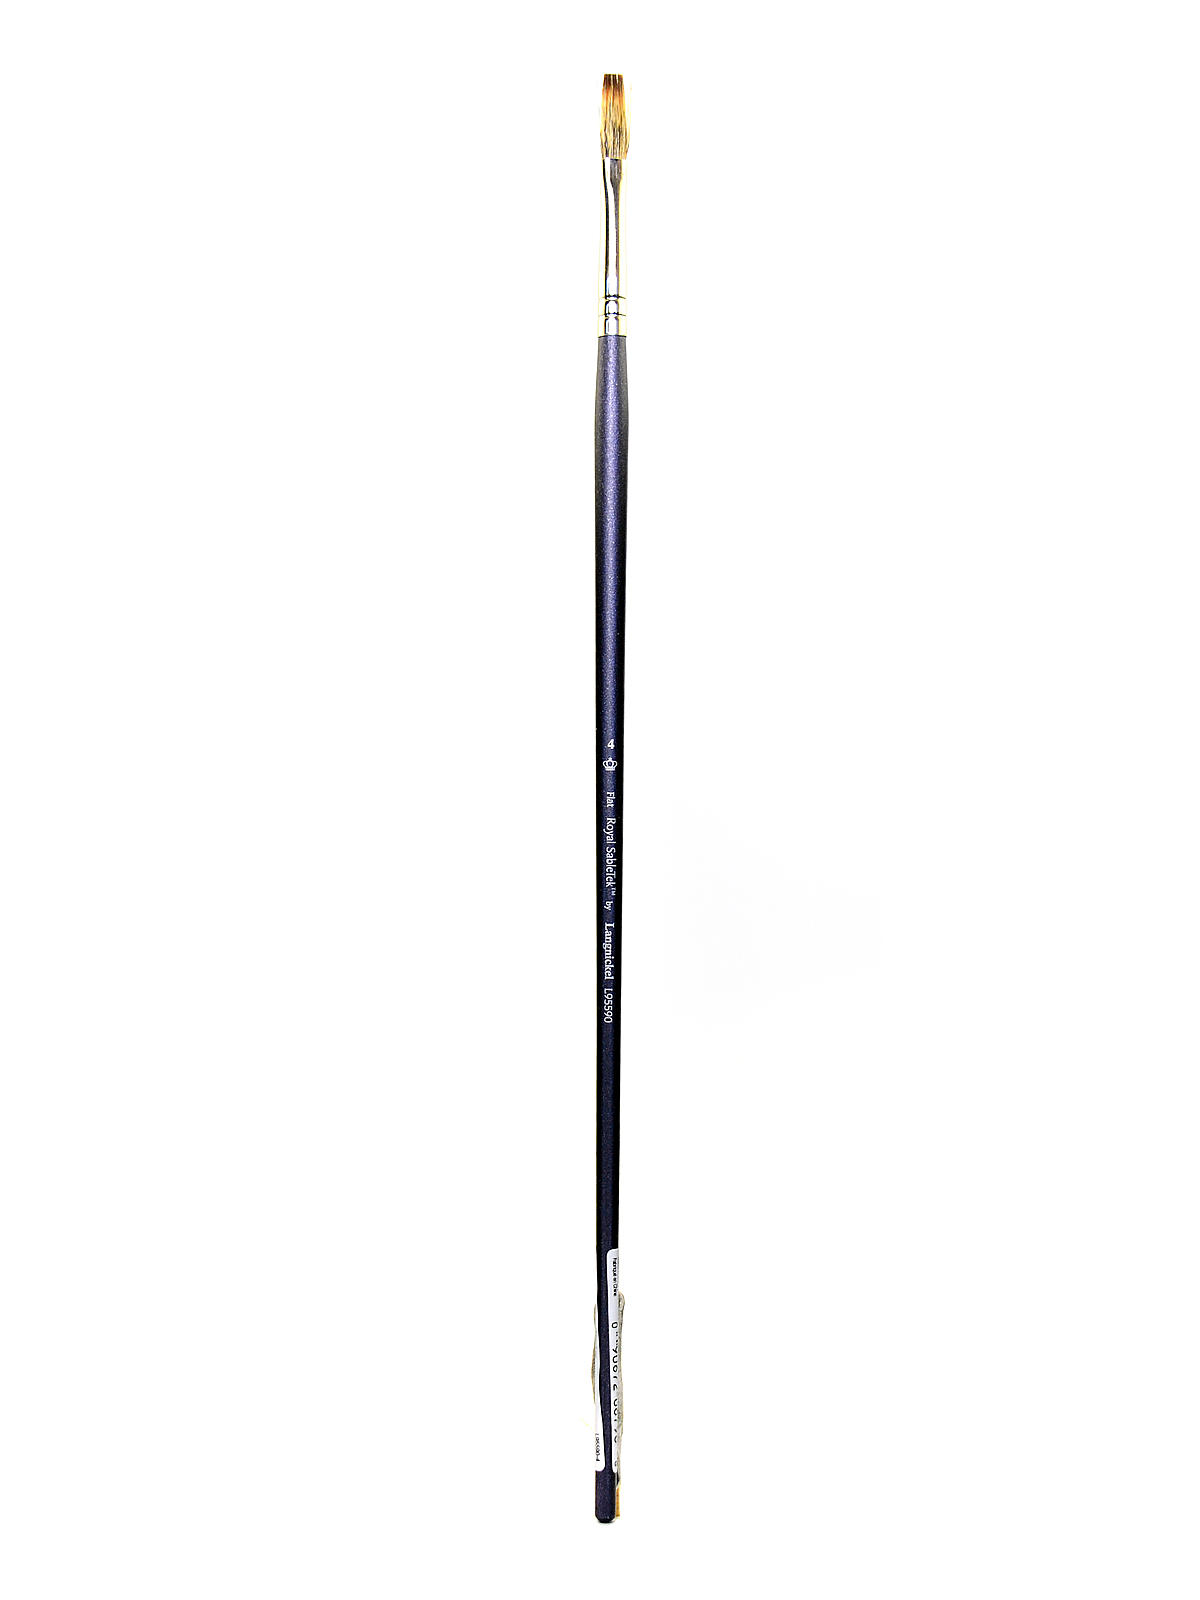 Sabletek Brushes Long Handle 4 Flat L95590